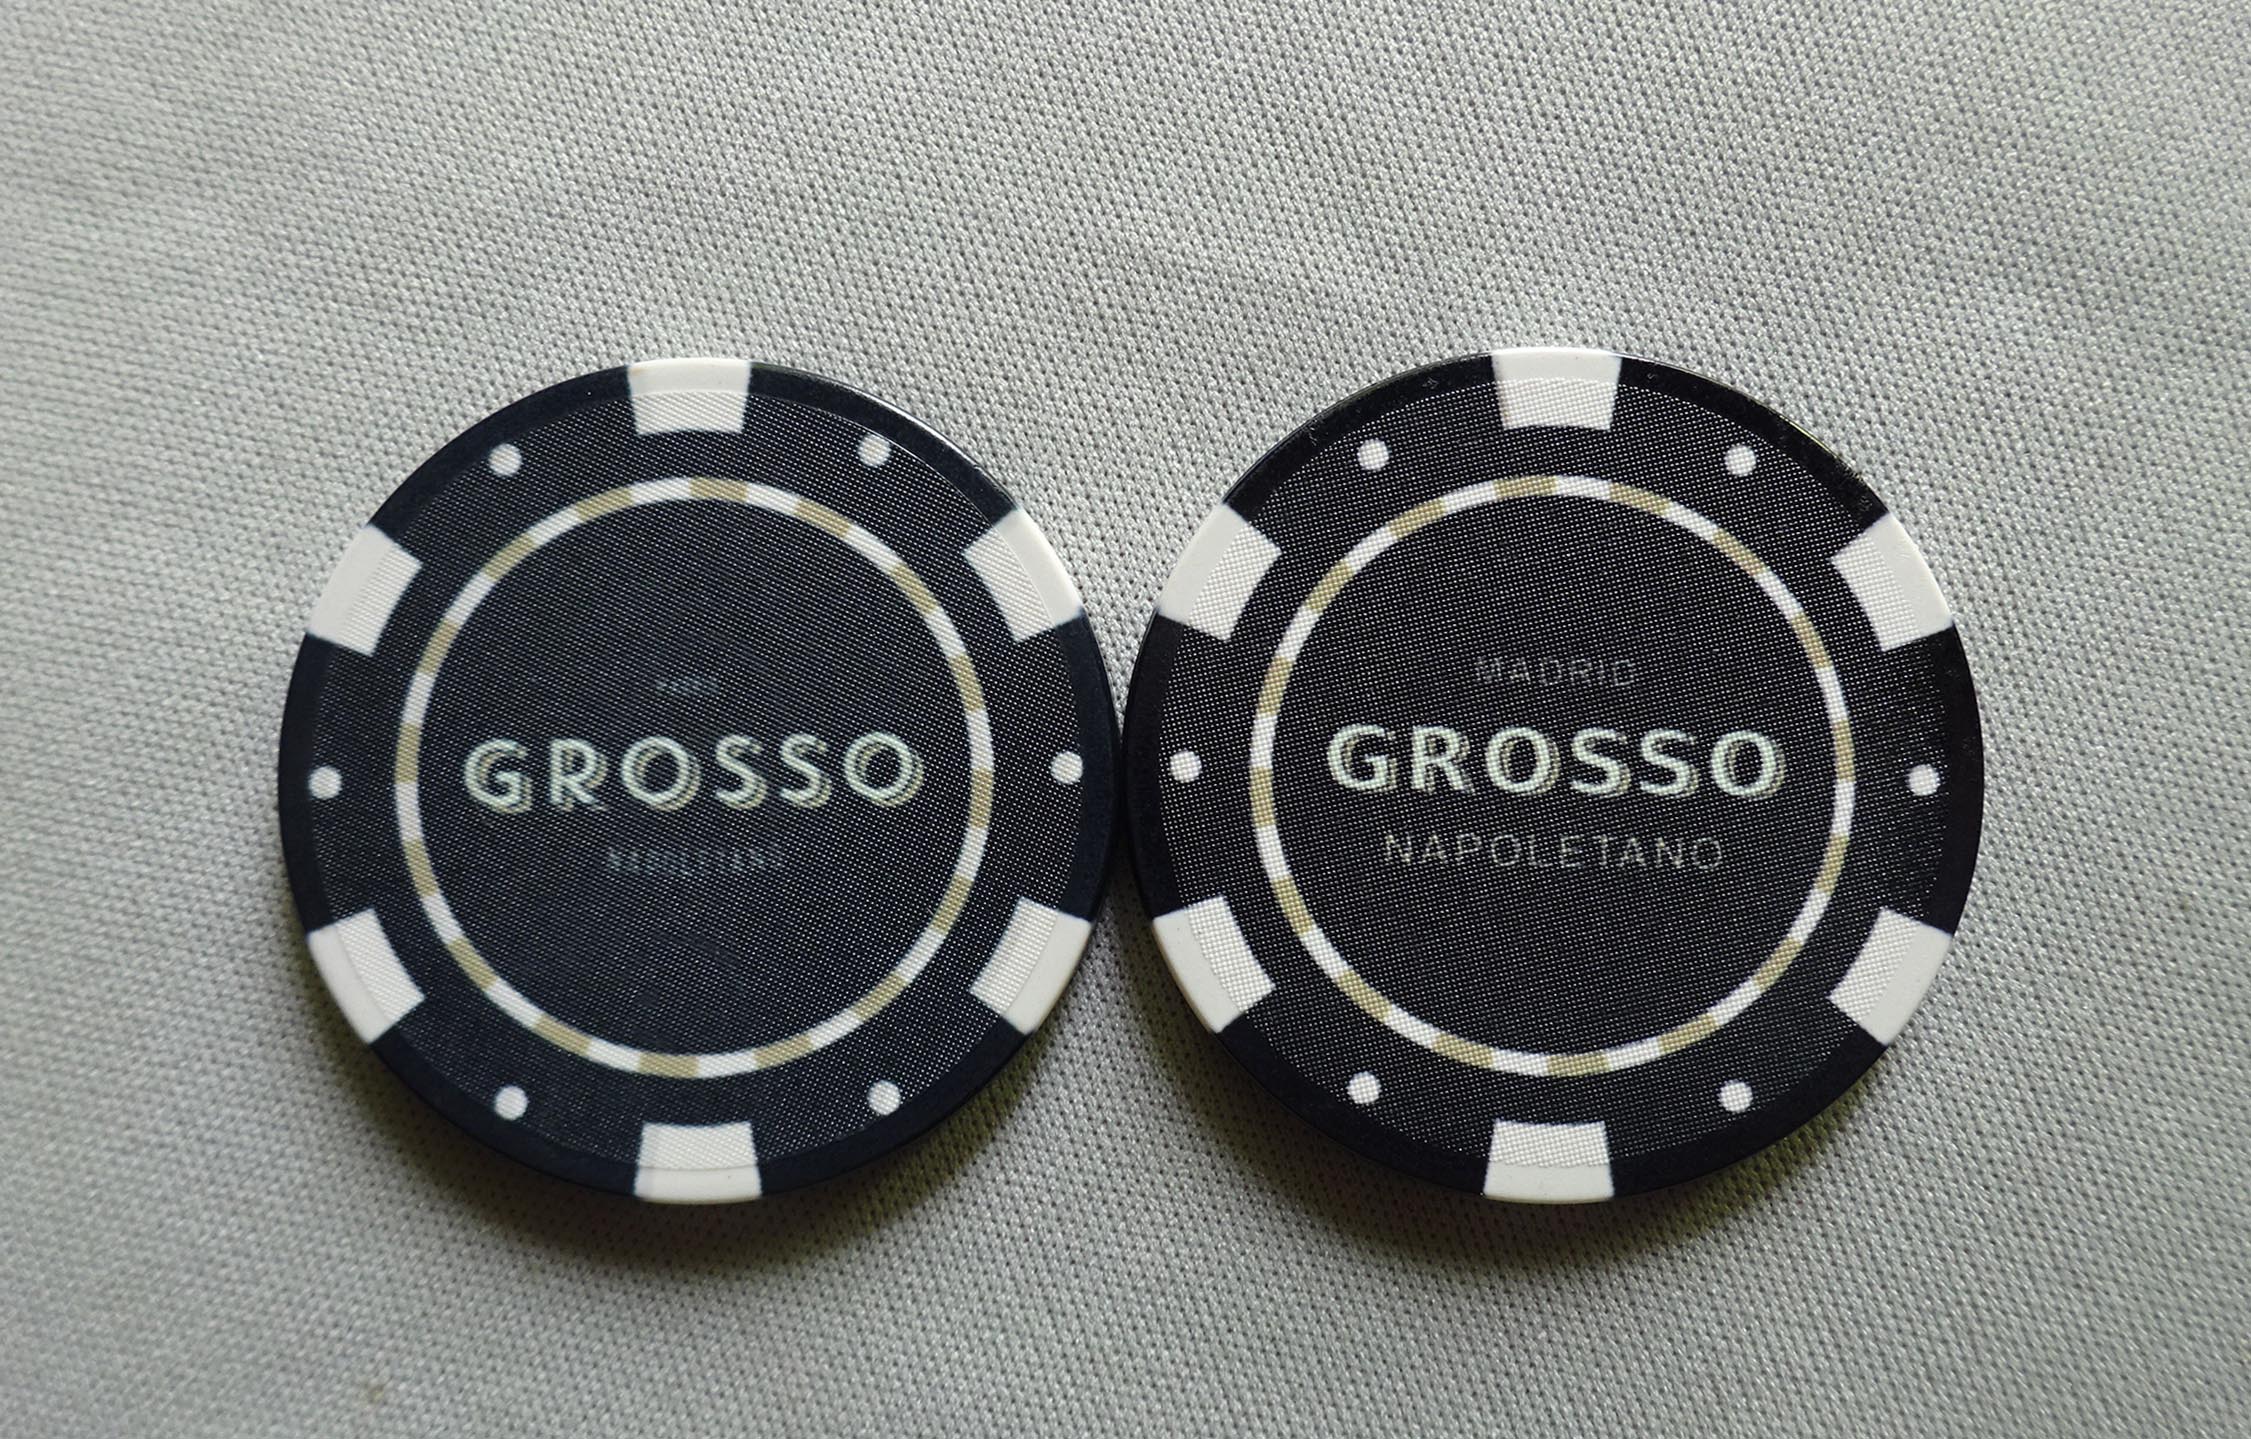 Muestra cerámica poker personalizada diseño poker grosso napoletano